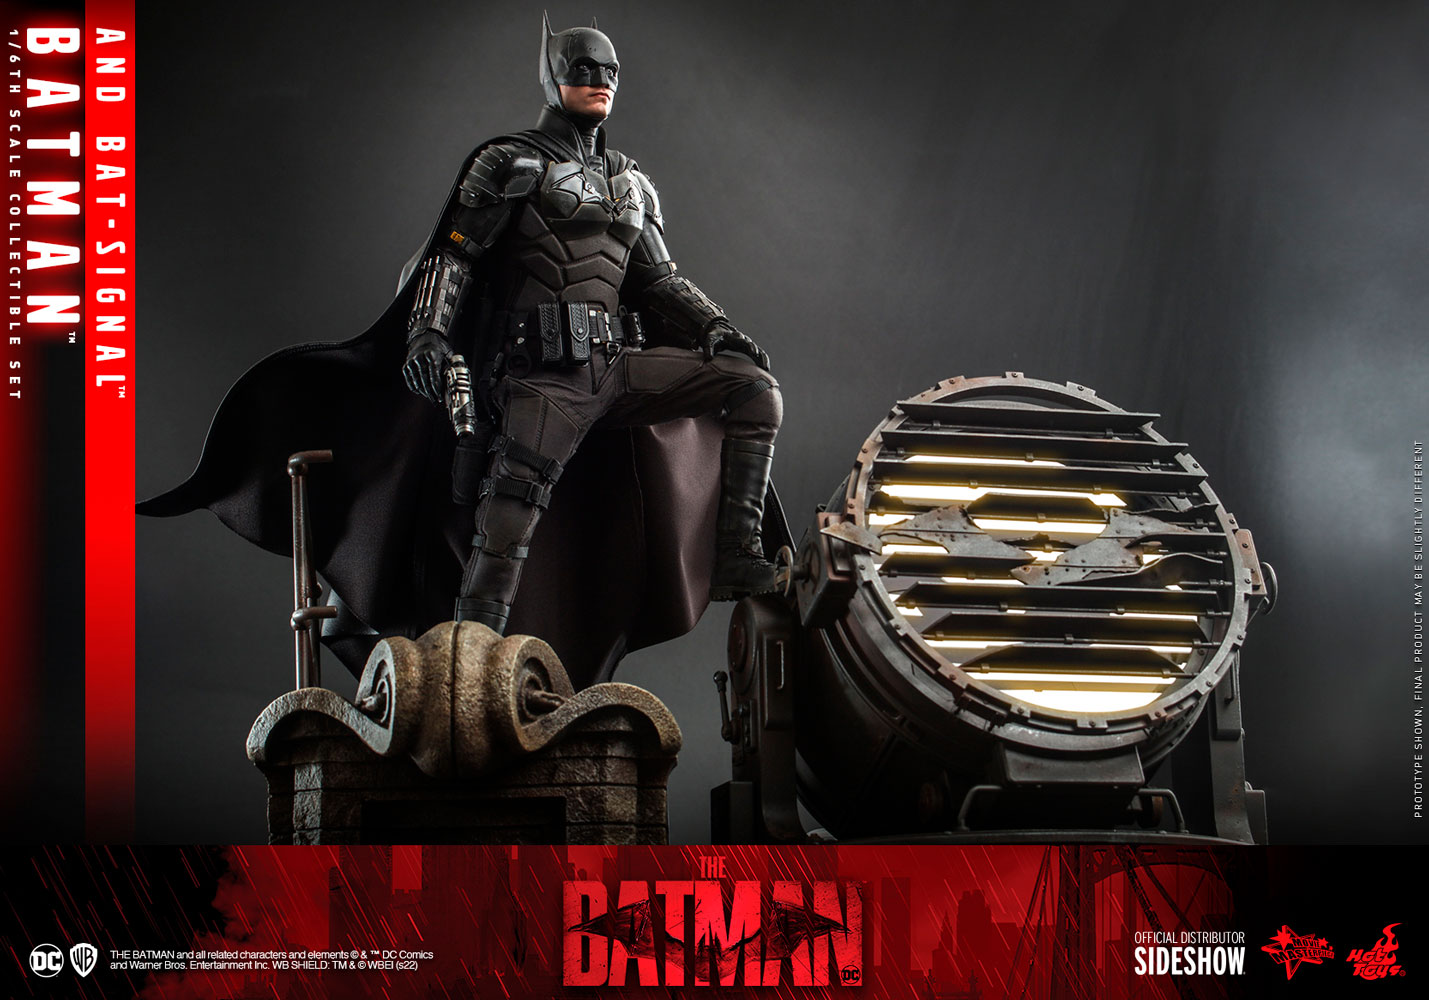 Batman and Bat-Signal Collectible Set by Hot Toys